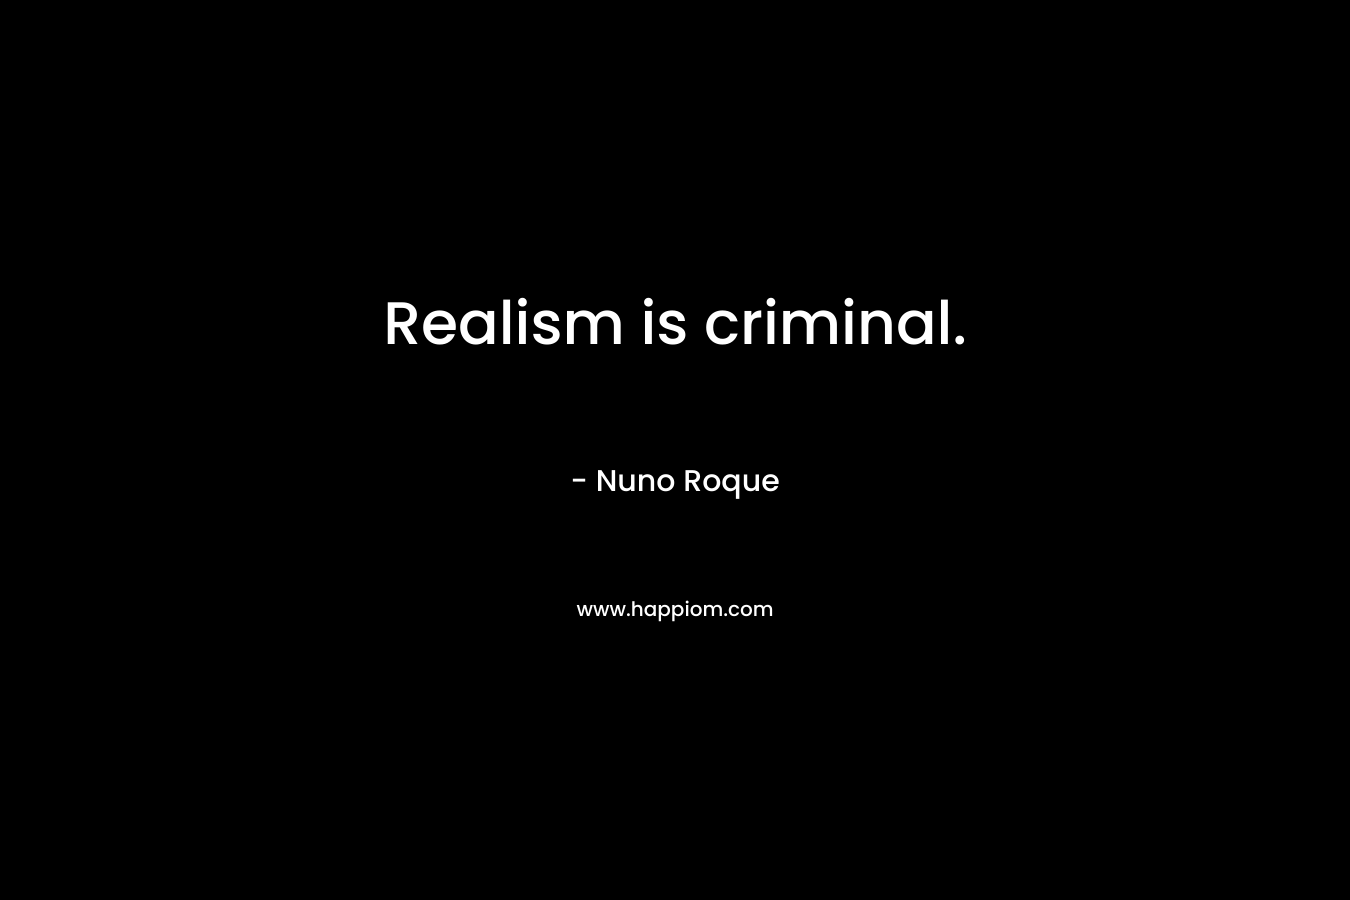 Realism is criminal.